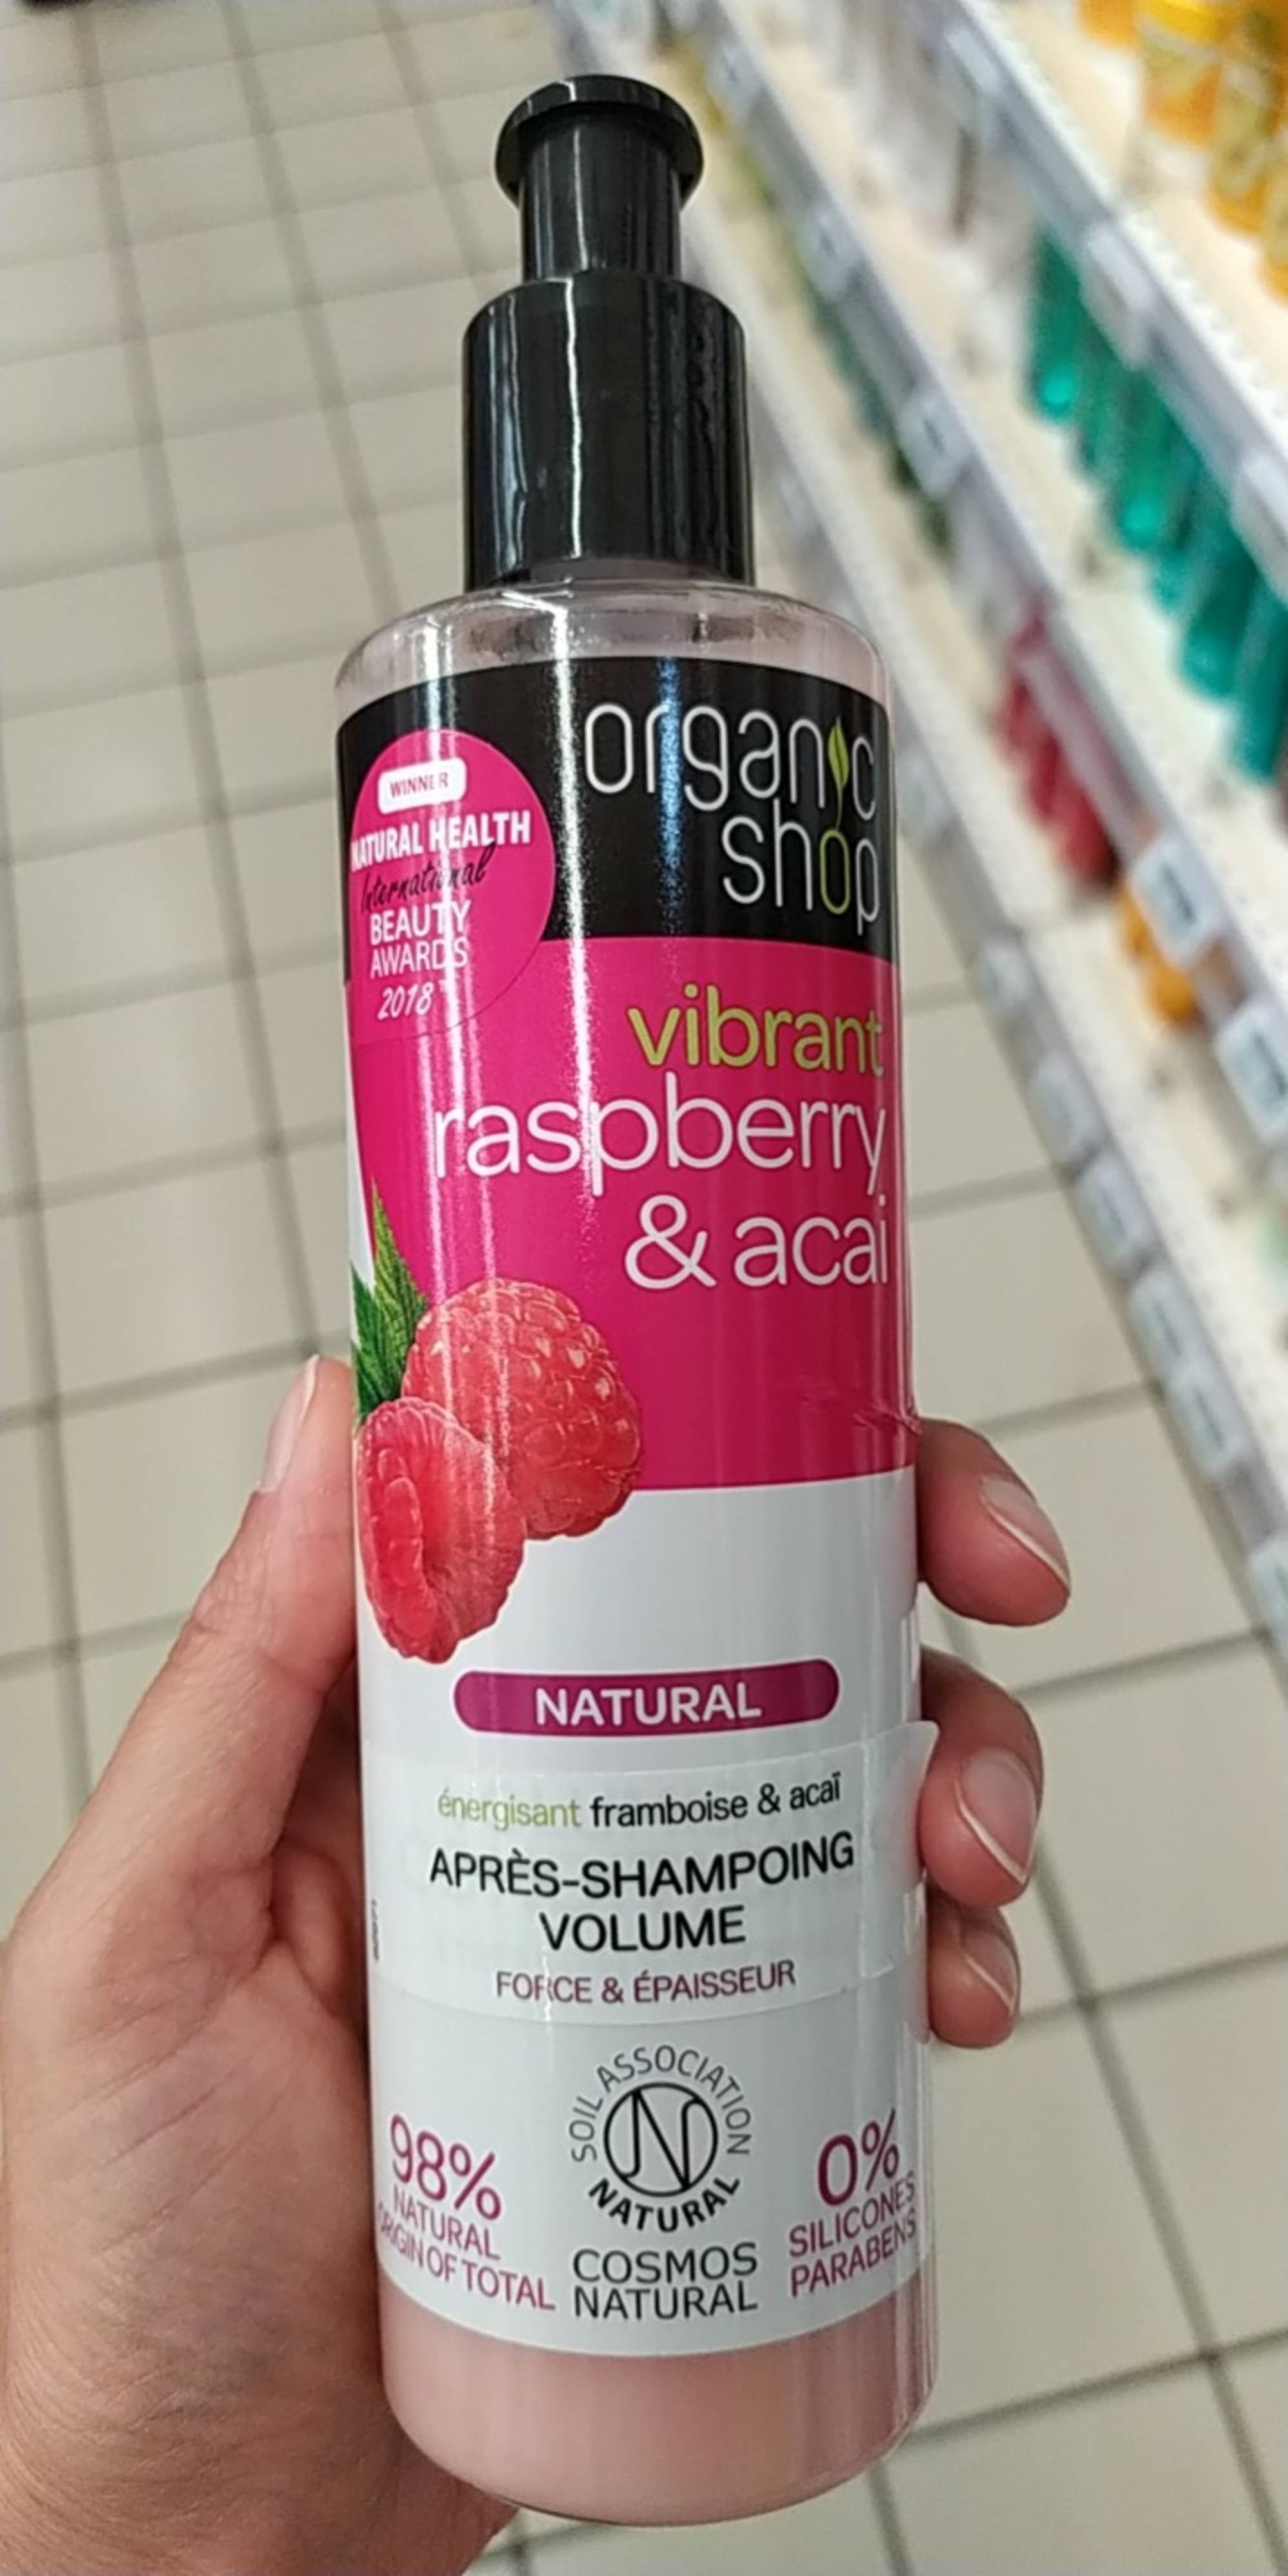 ORGANIC SHOP - Vibrant raspberry & acai - Après shampooing volume